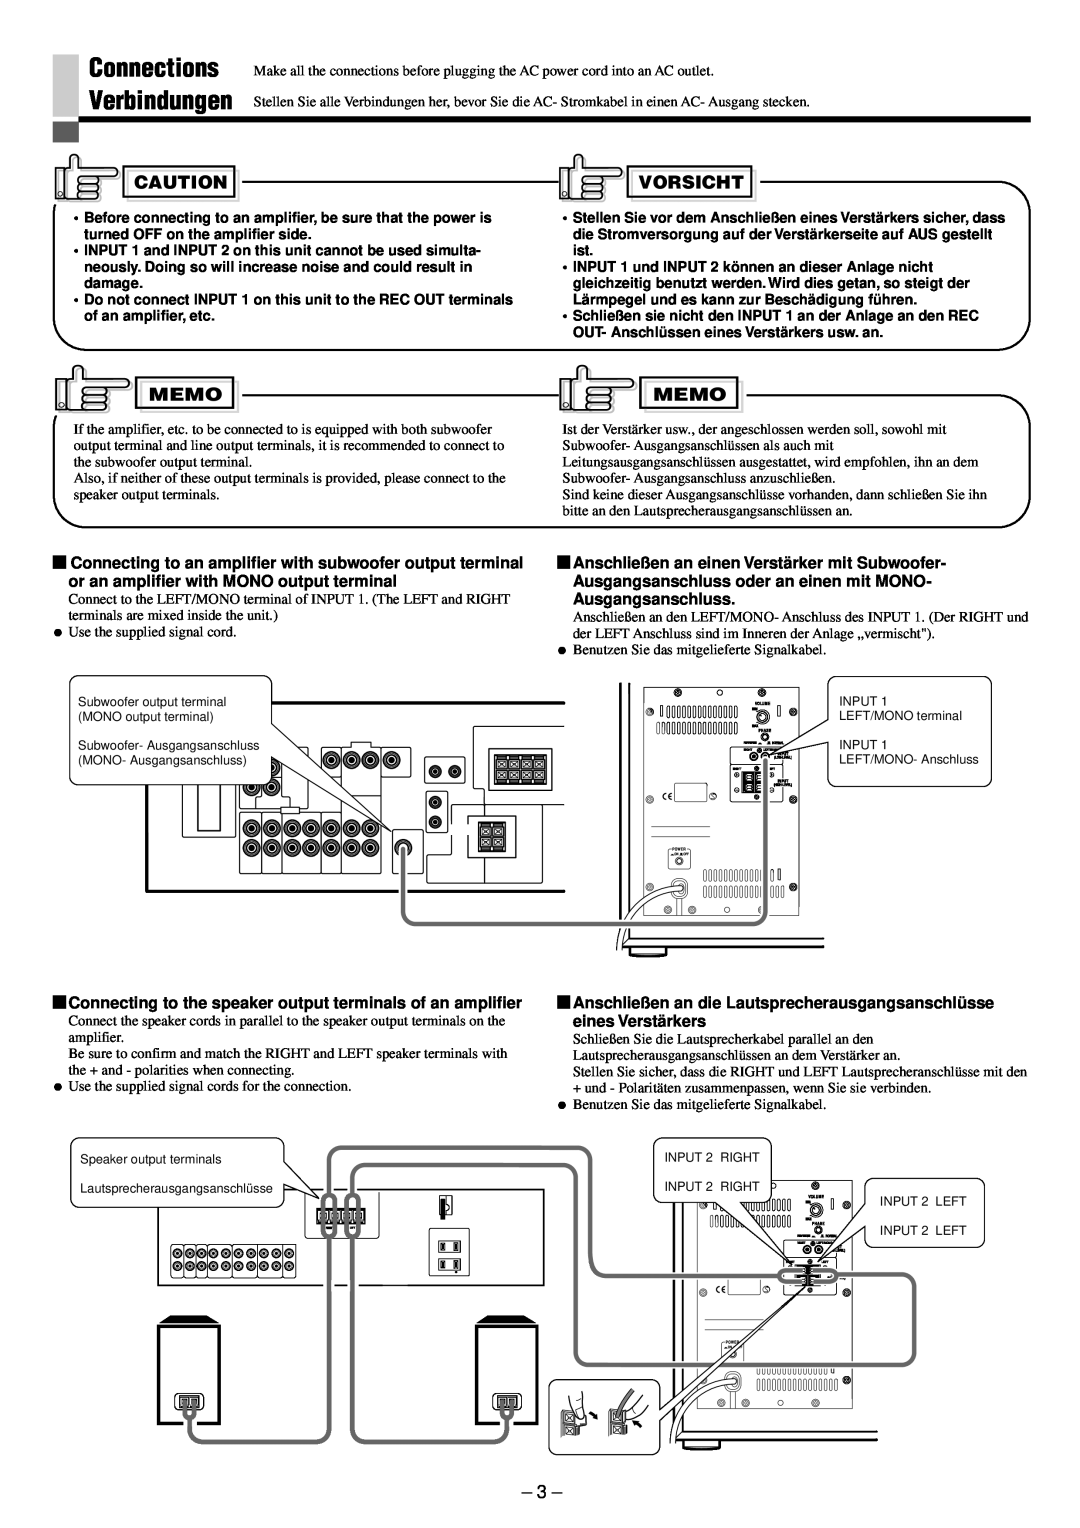 JVC SP-PW880 manual Connections Verbindungen, Vorsicht, Memo 